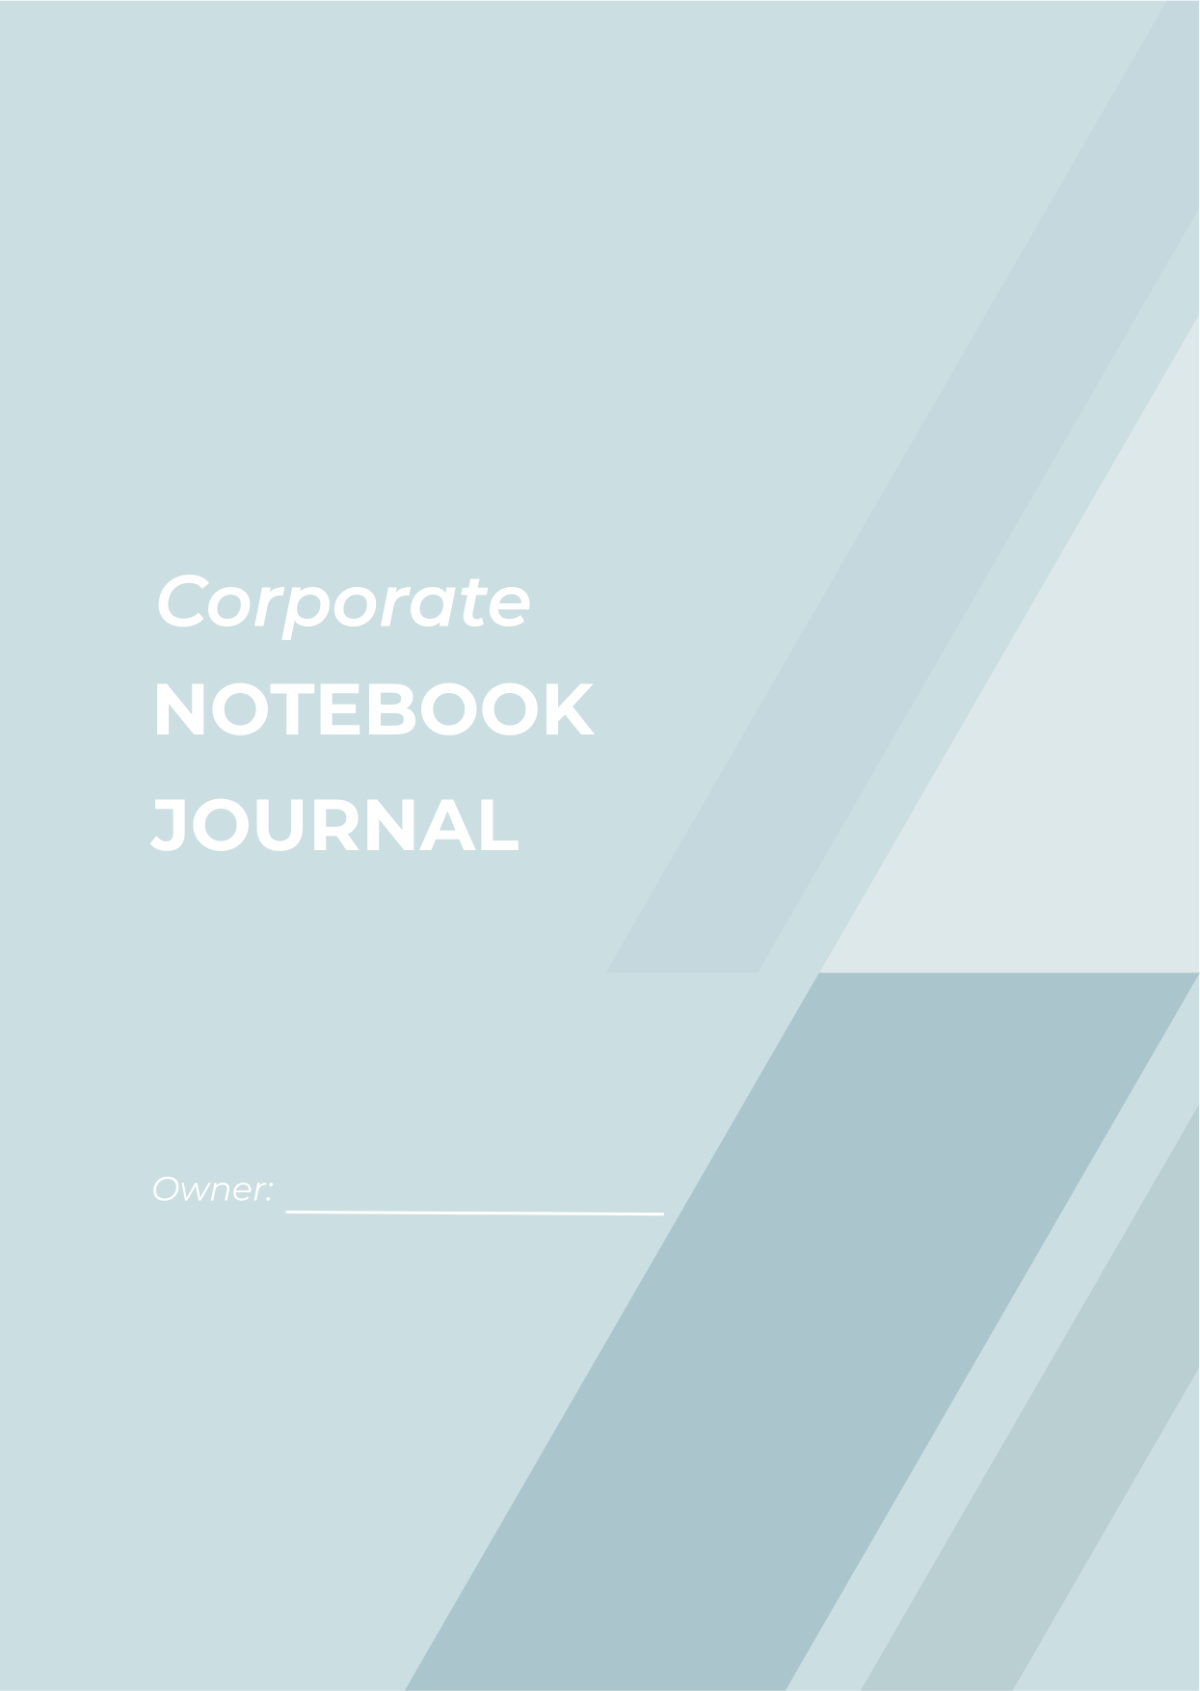 Corporate Notebook Journals Template